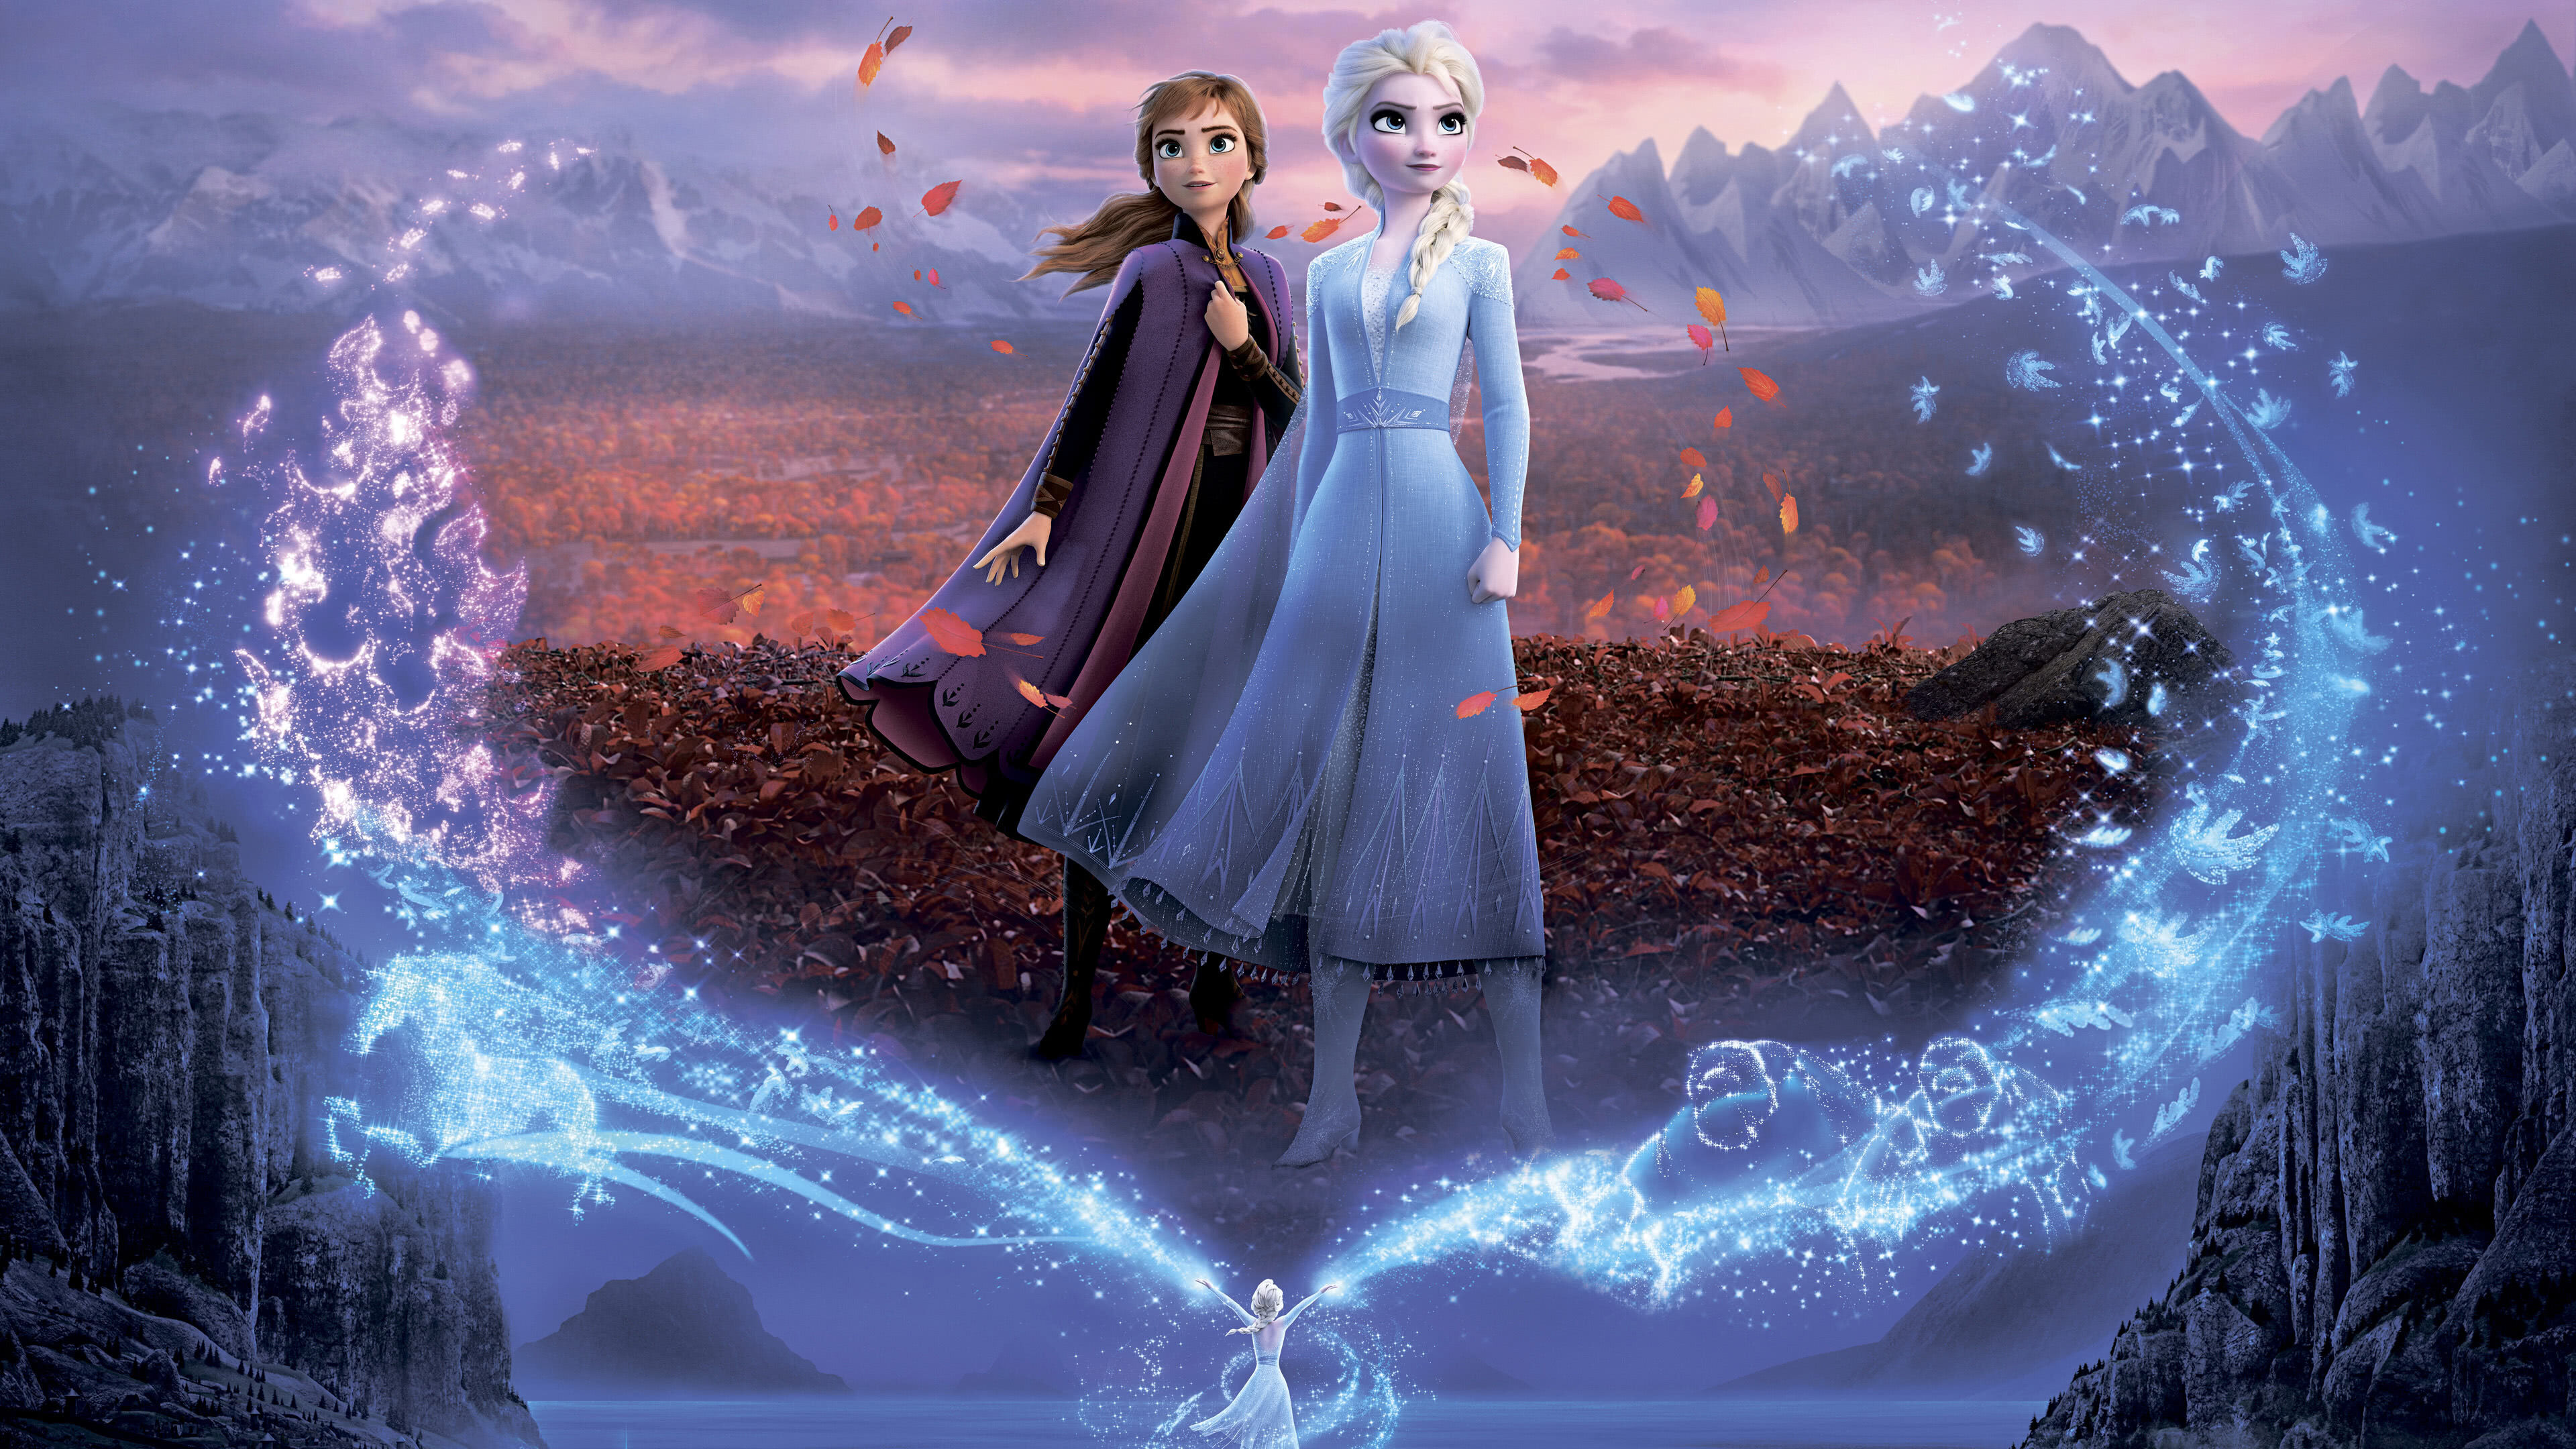 Frozen 2 Elsa And Anna Poster UHD 4K Wallpaper | Pixelz